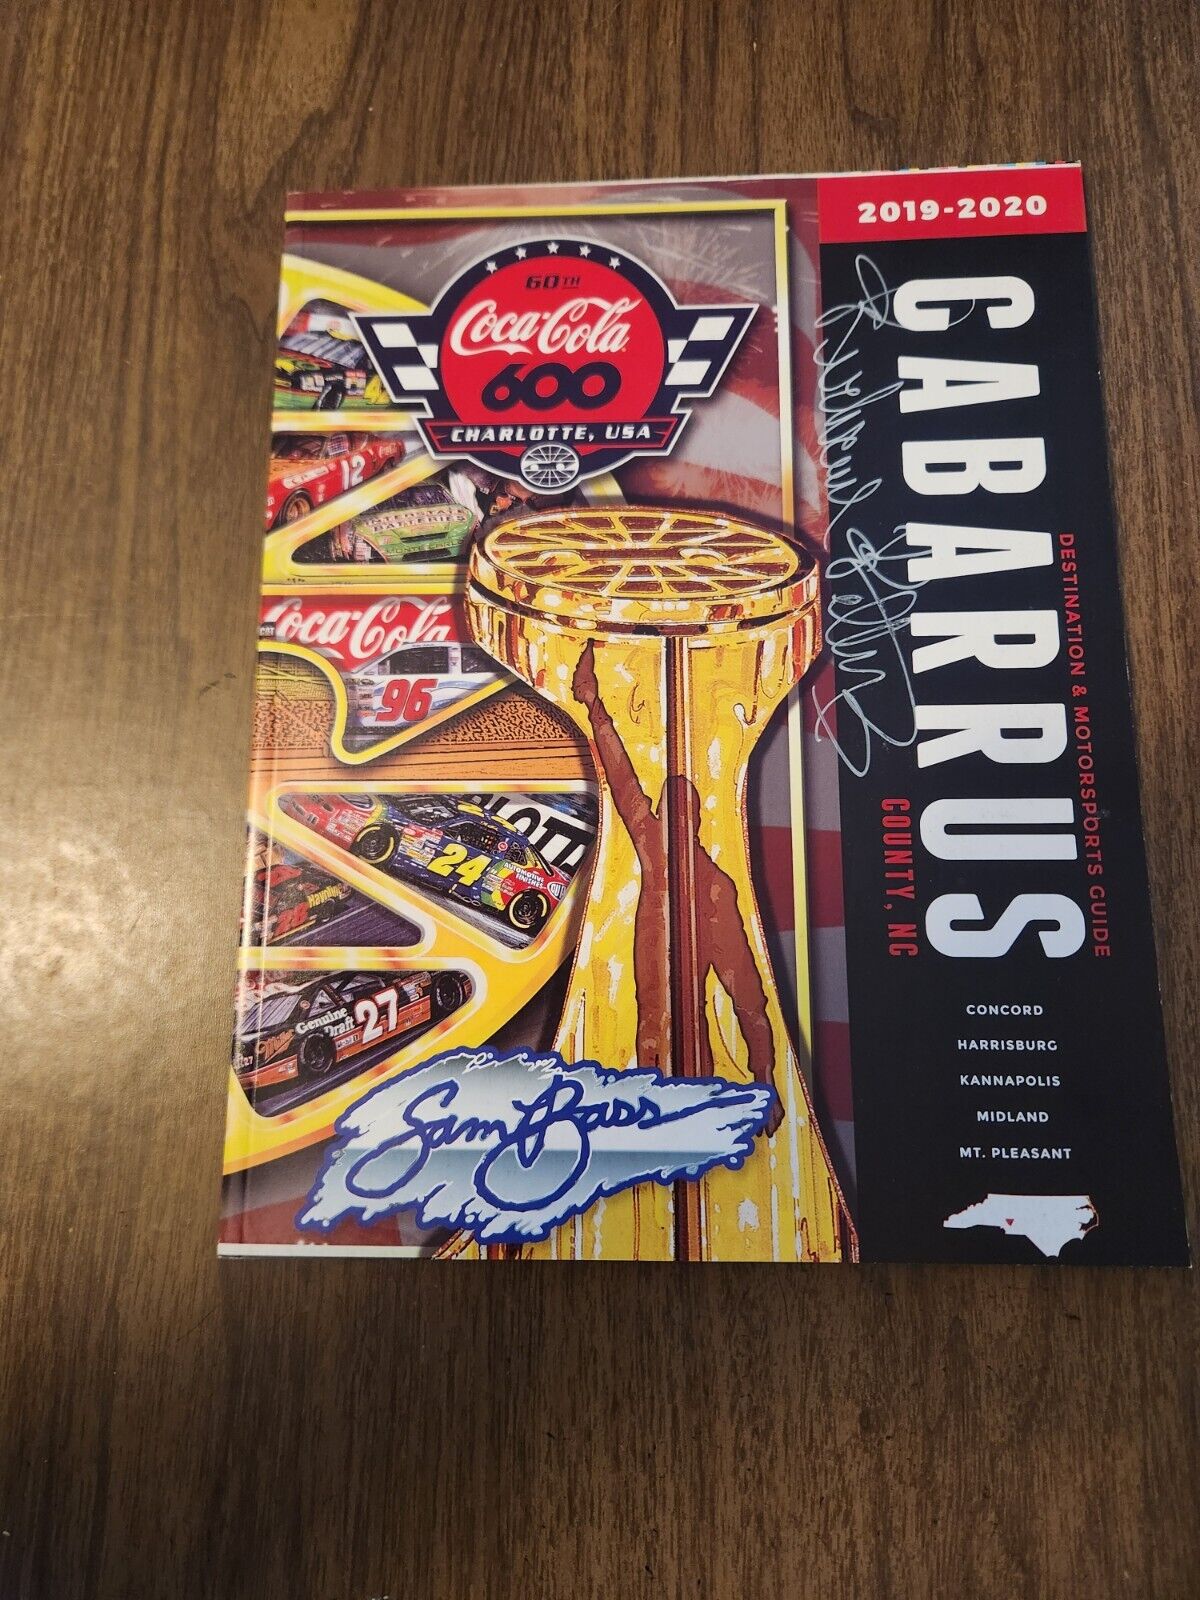 Richard Petty Autographed Cabarrus Coca-Cola 60th Anniversary Magazine